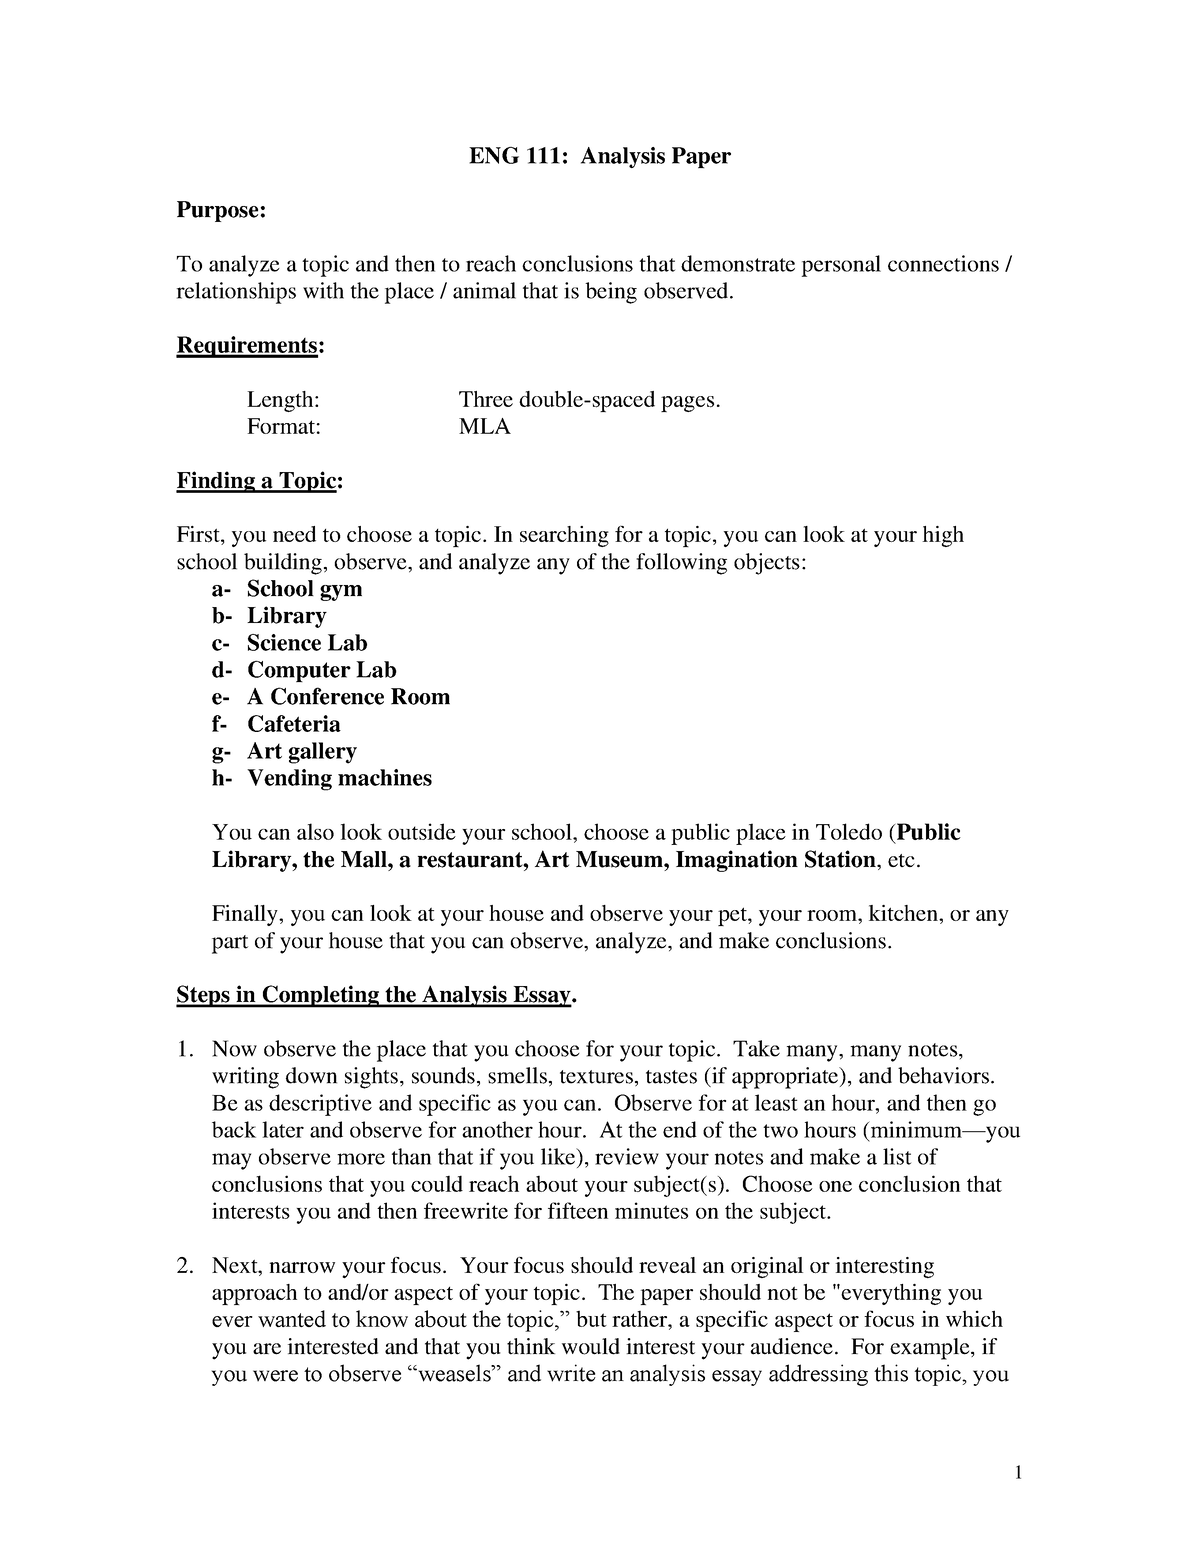 literary analysis essay assignment sheet